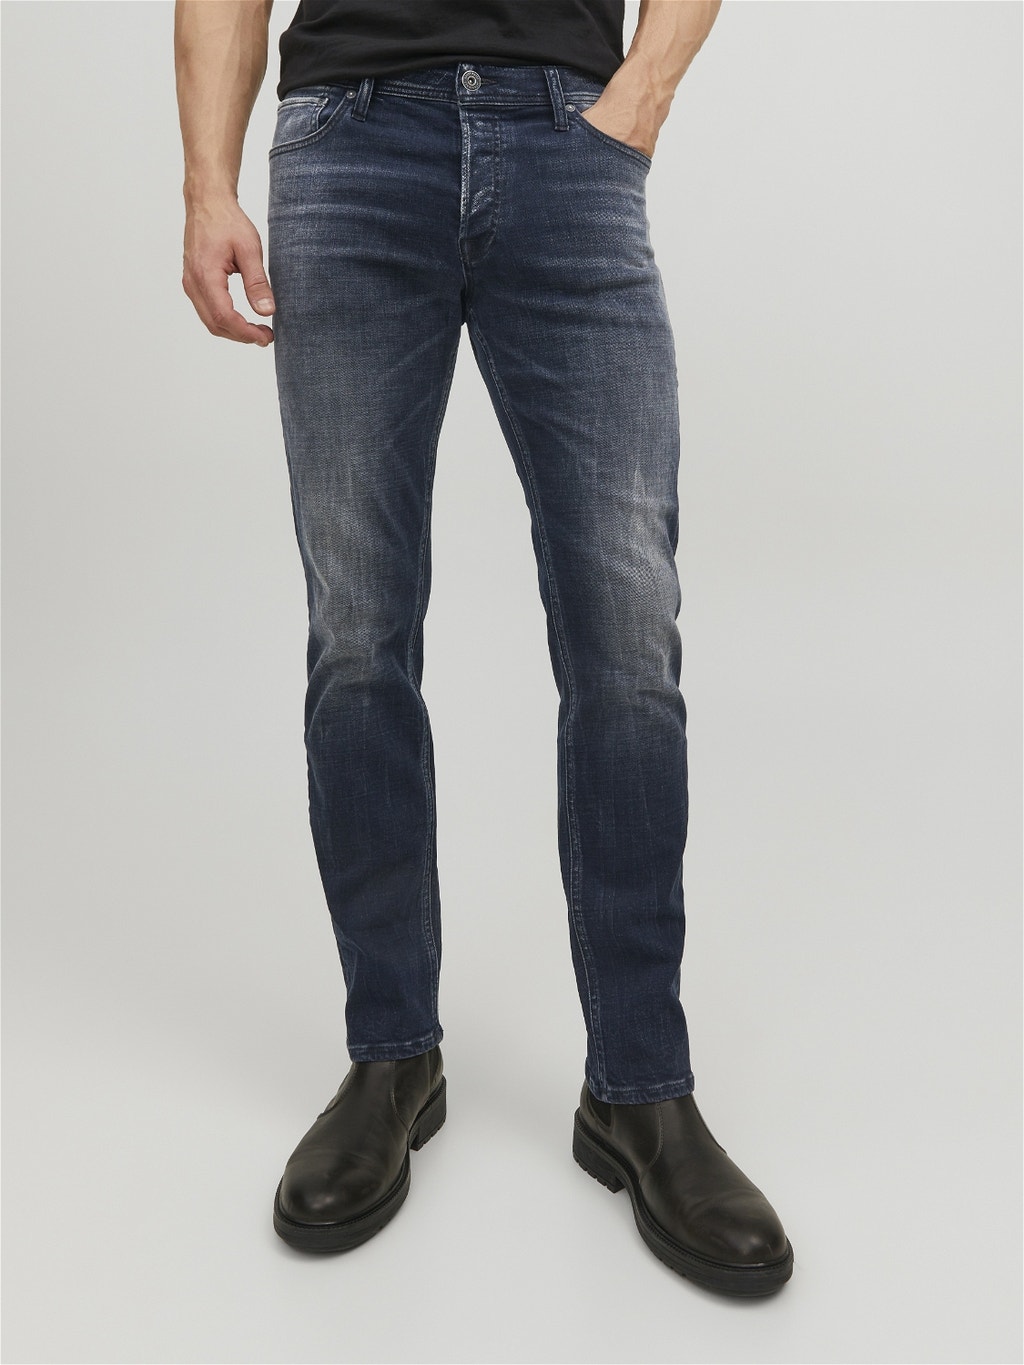 Original GE 786 fit jeans | Medium Blue | Jack & Jones®